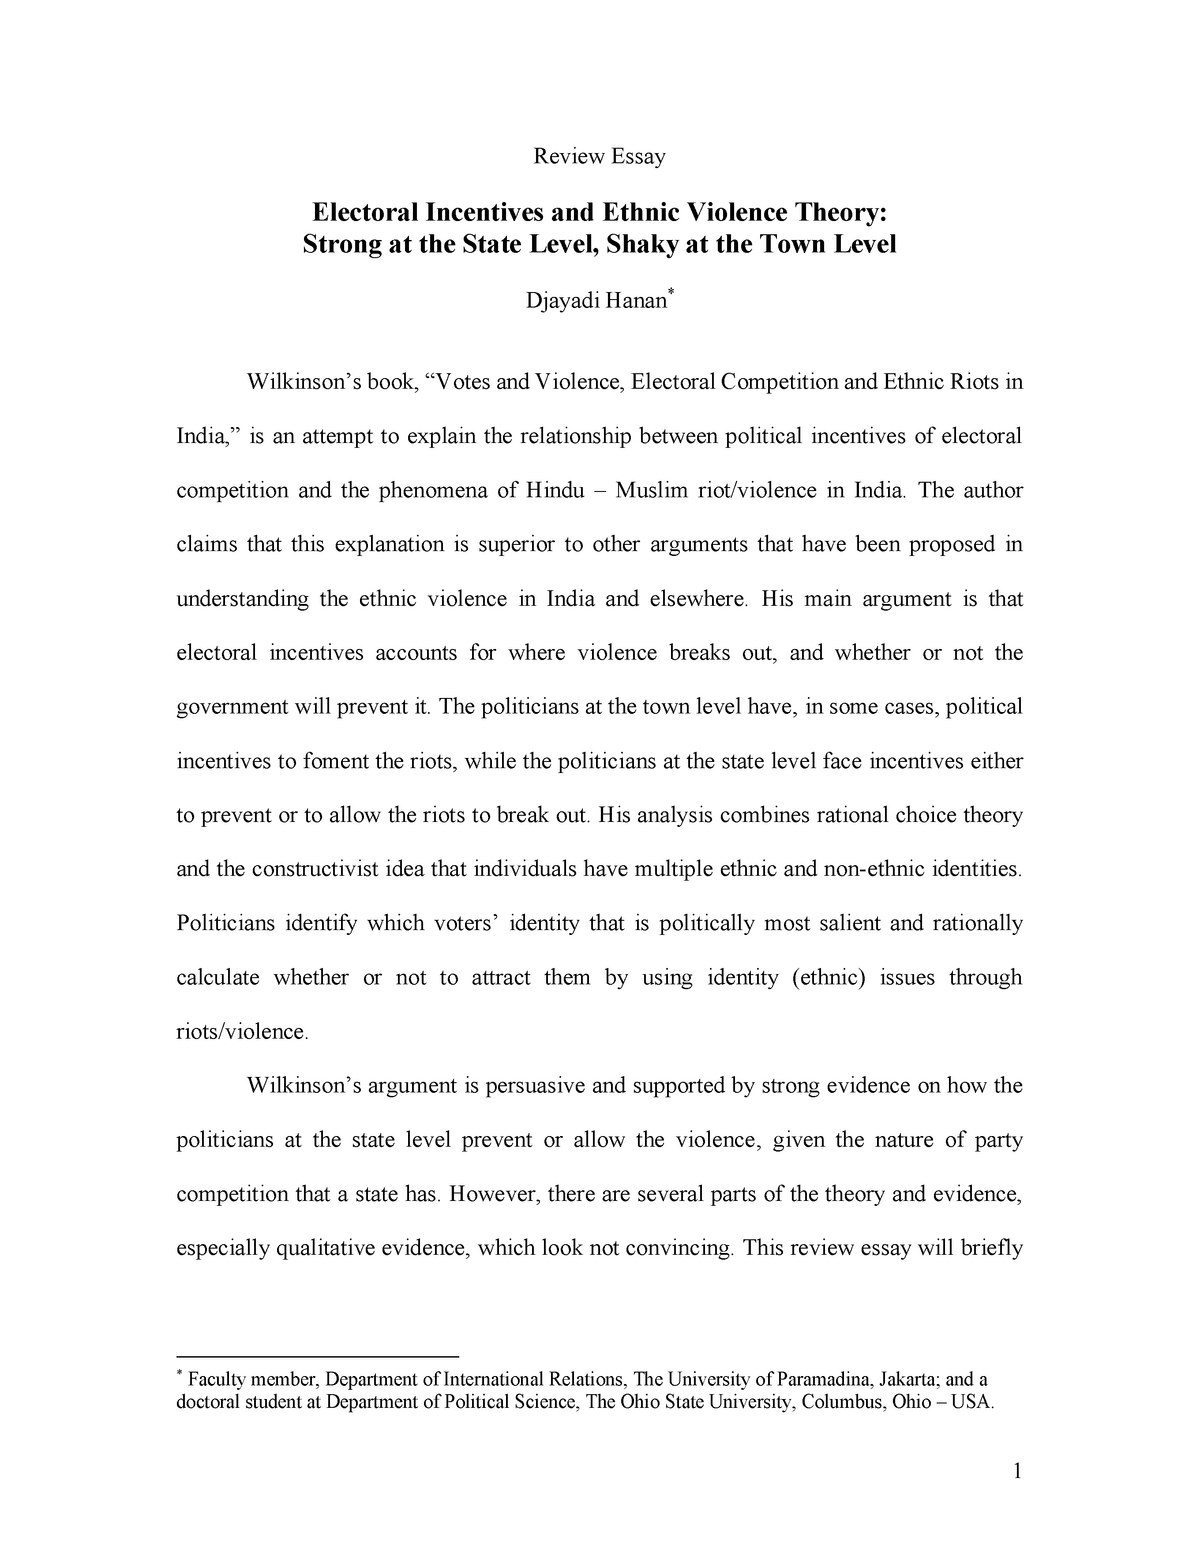 Contoh Review Essay Grade A Review Essay Electoral Incentives And Ethnic Violence Theory Studocu